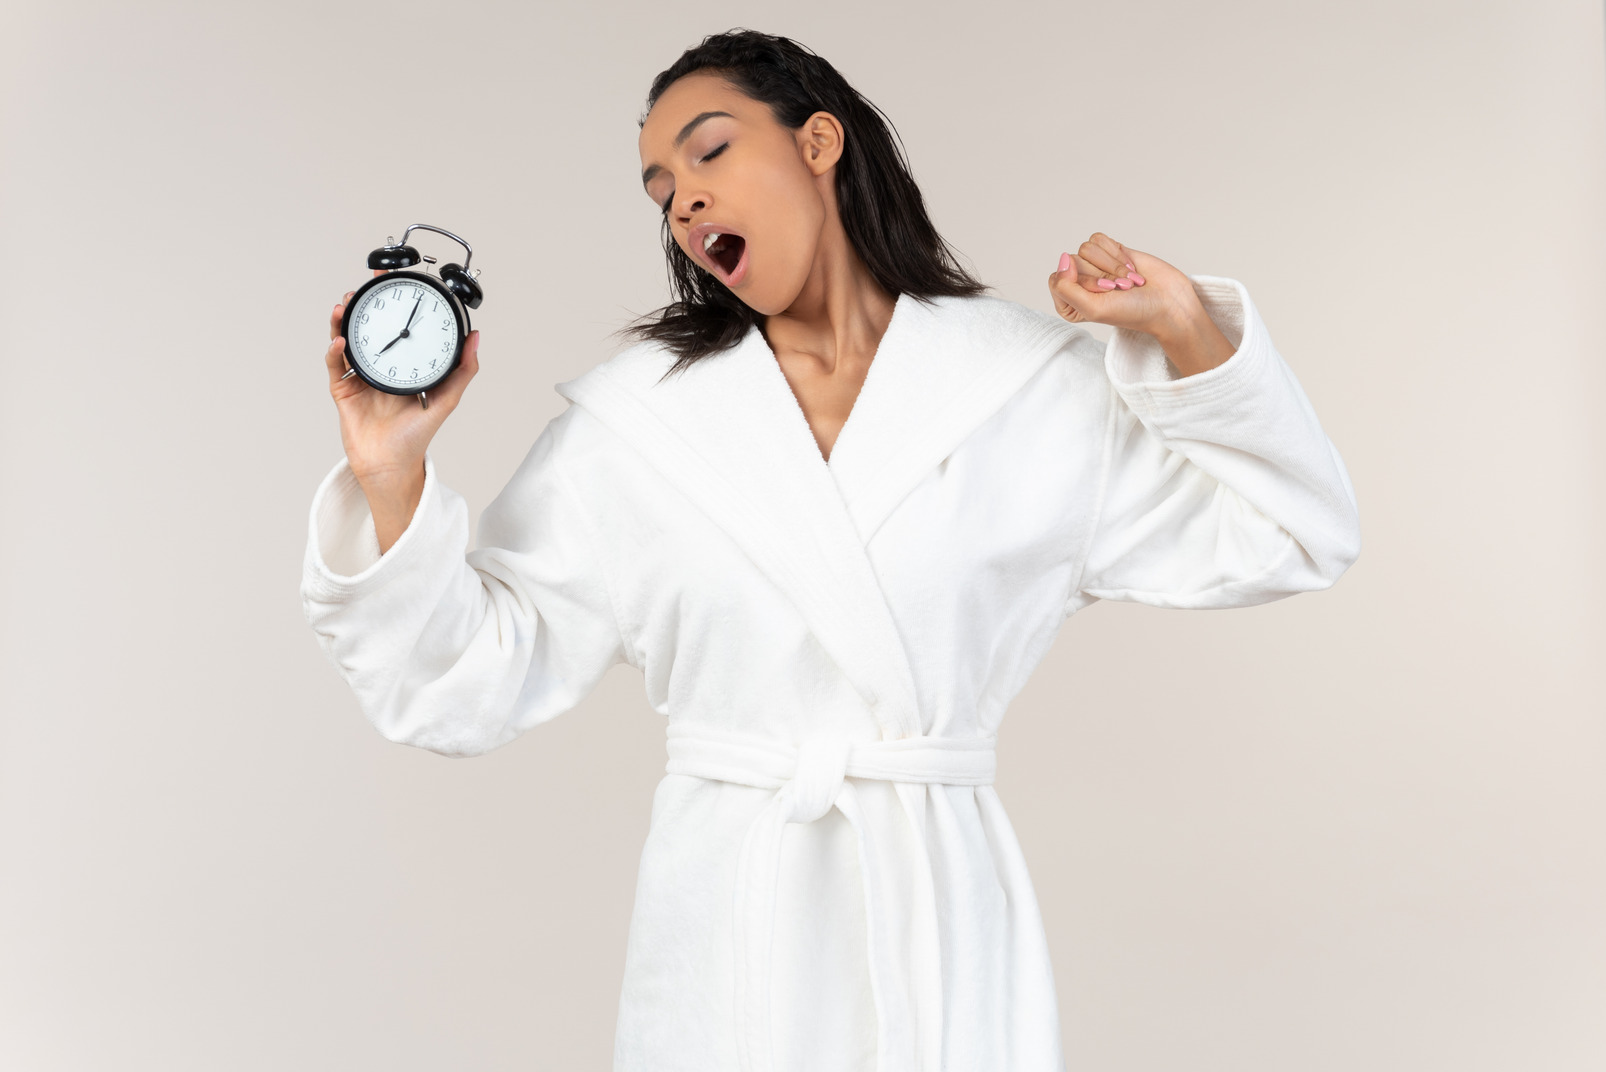 Alarm clock rhymes with sleepwalk for a reason